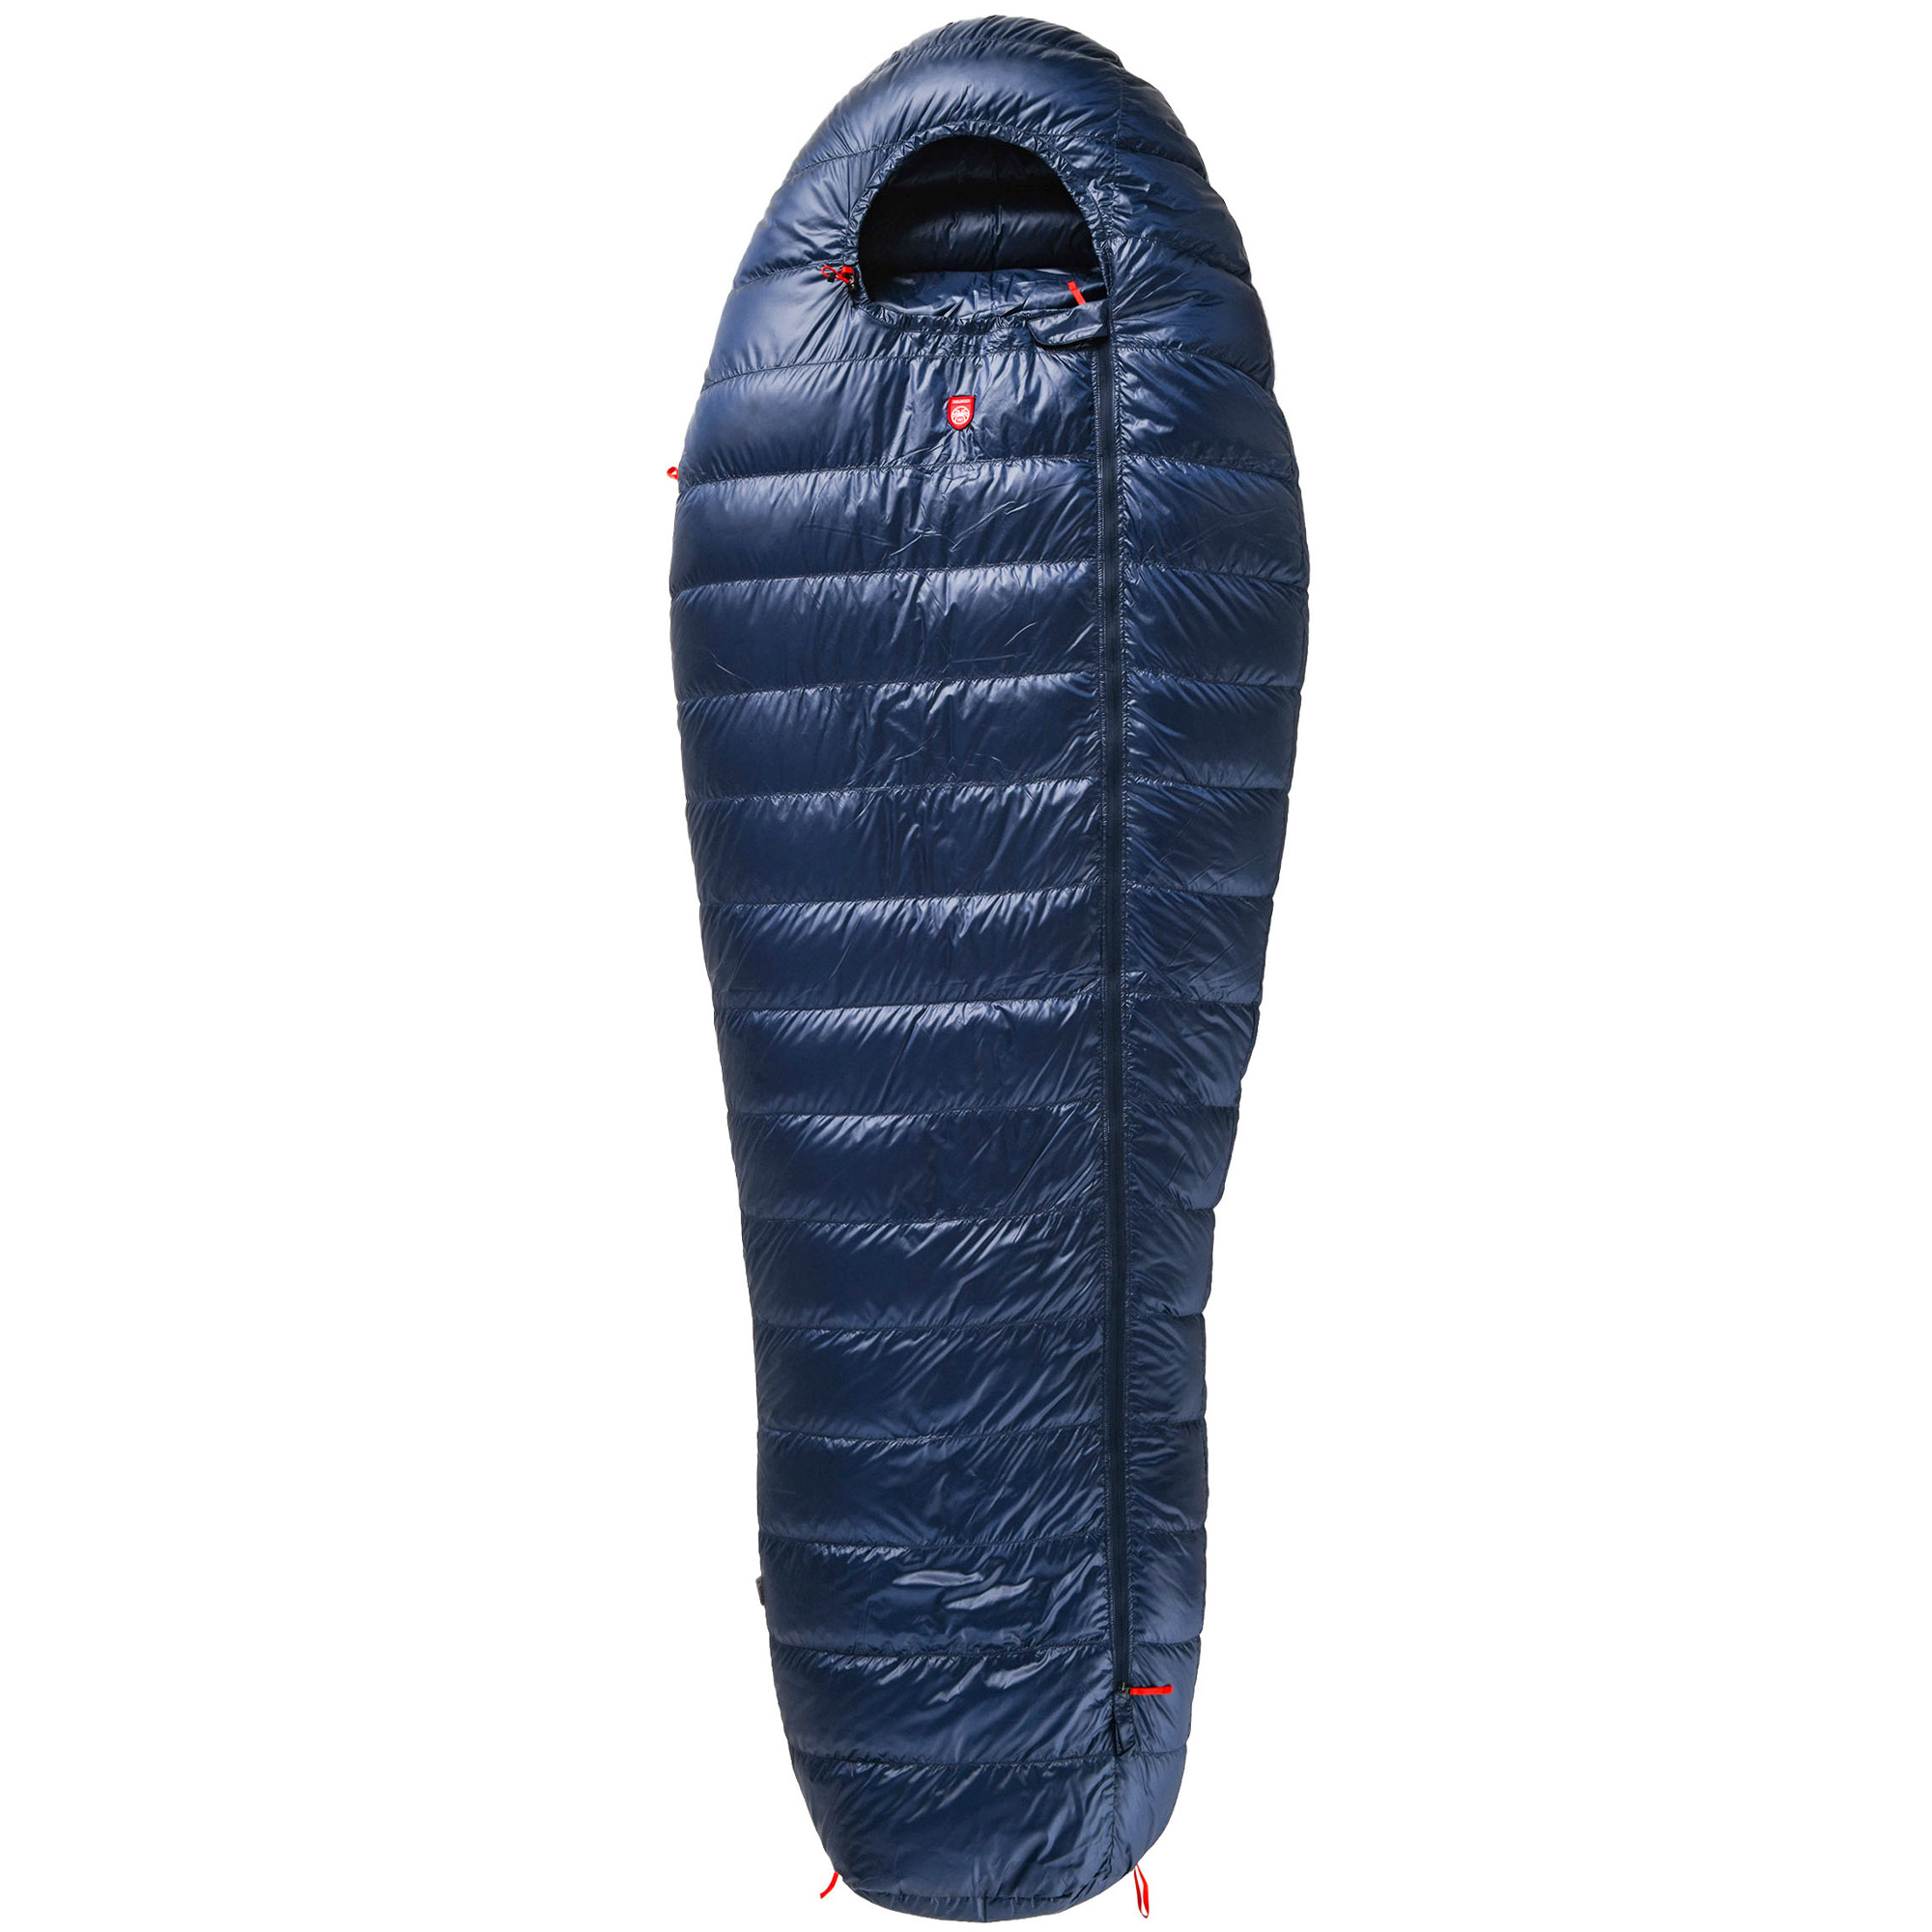 CORE, 550 sleeping bag, long, navy